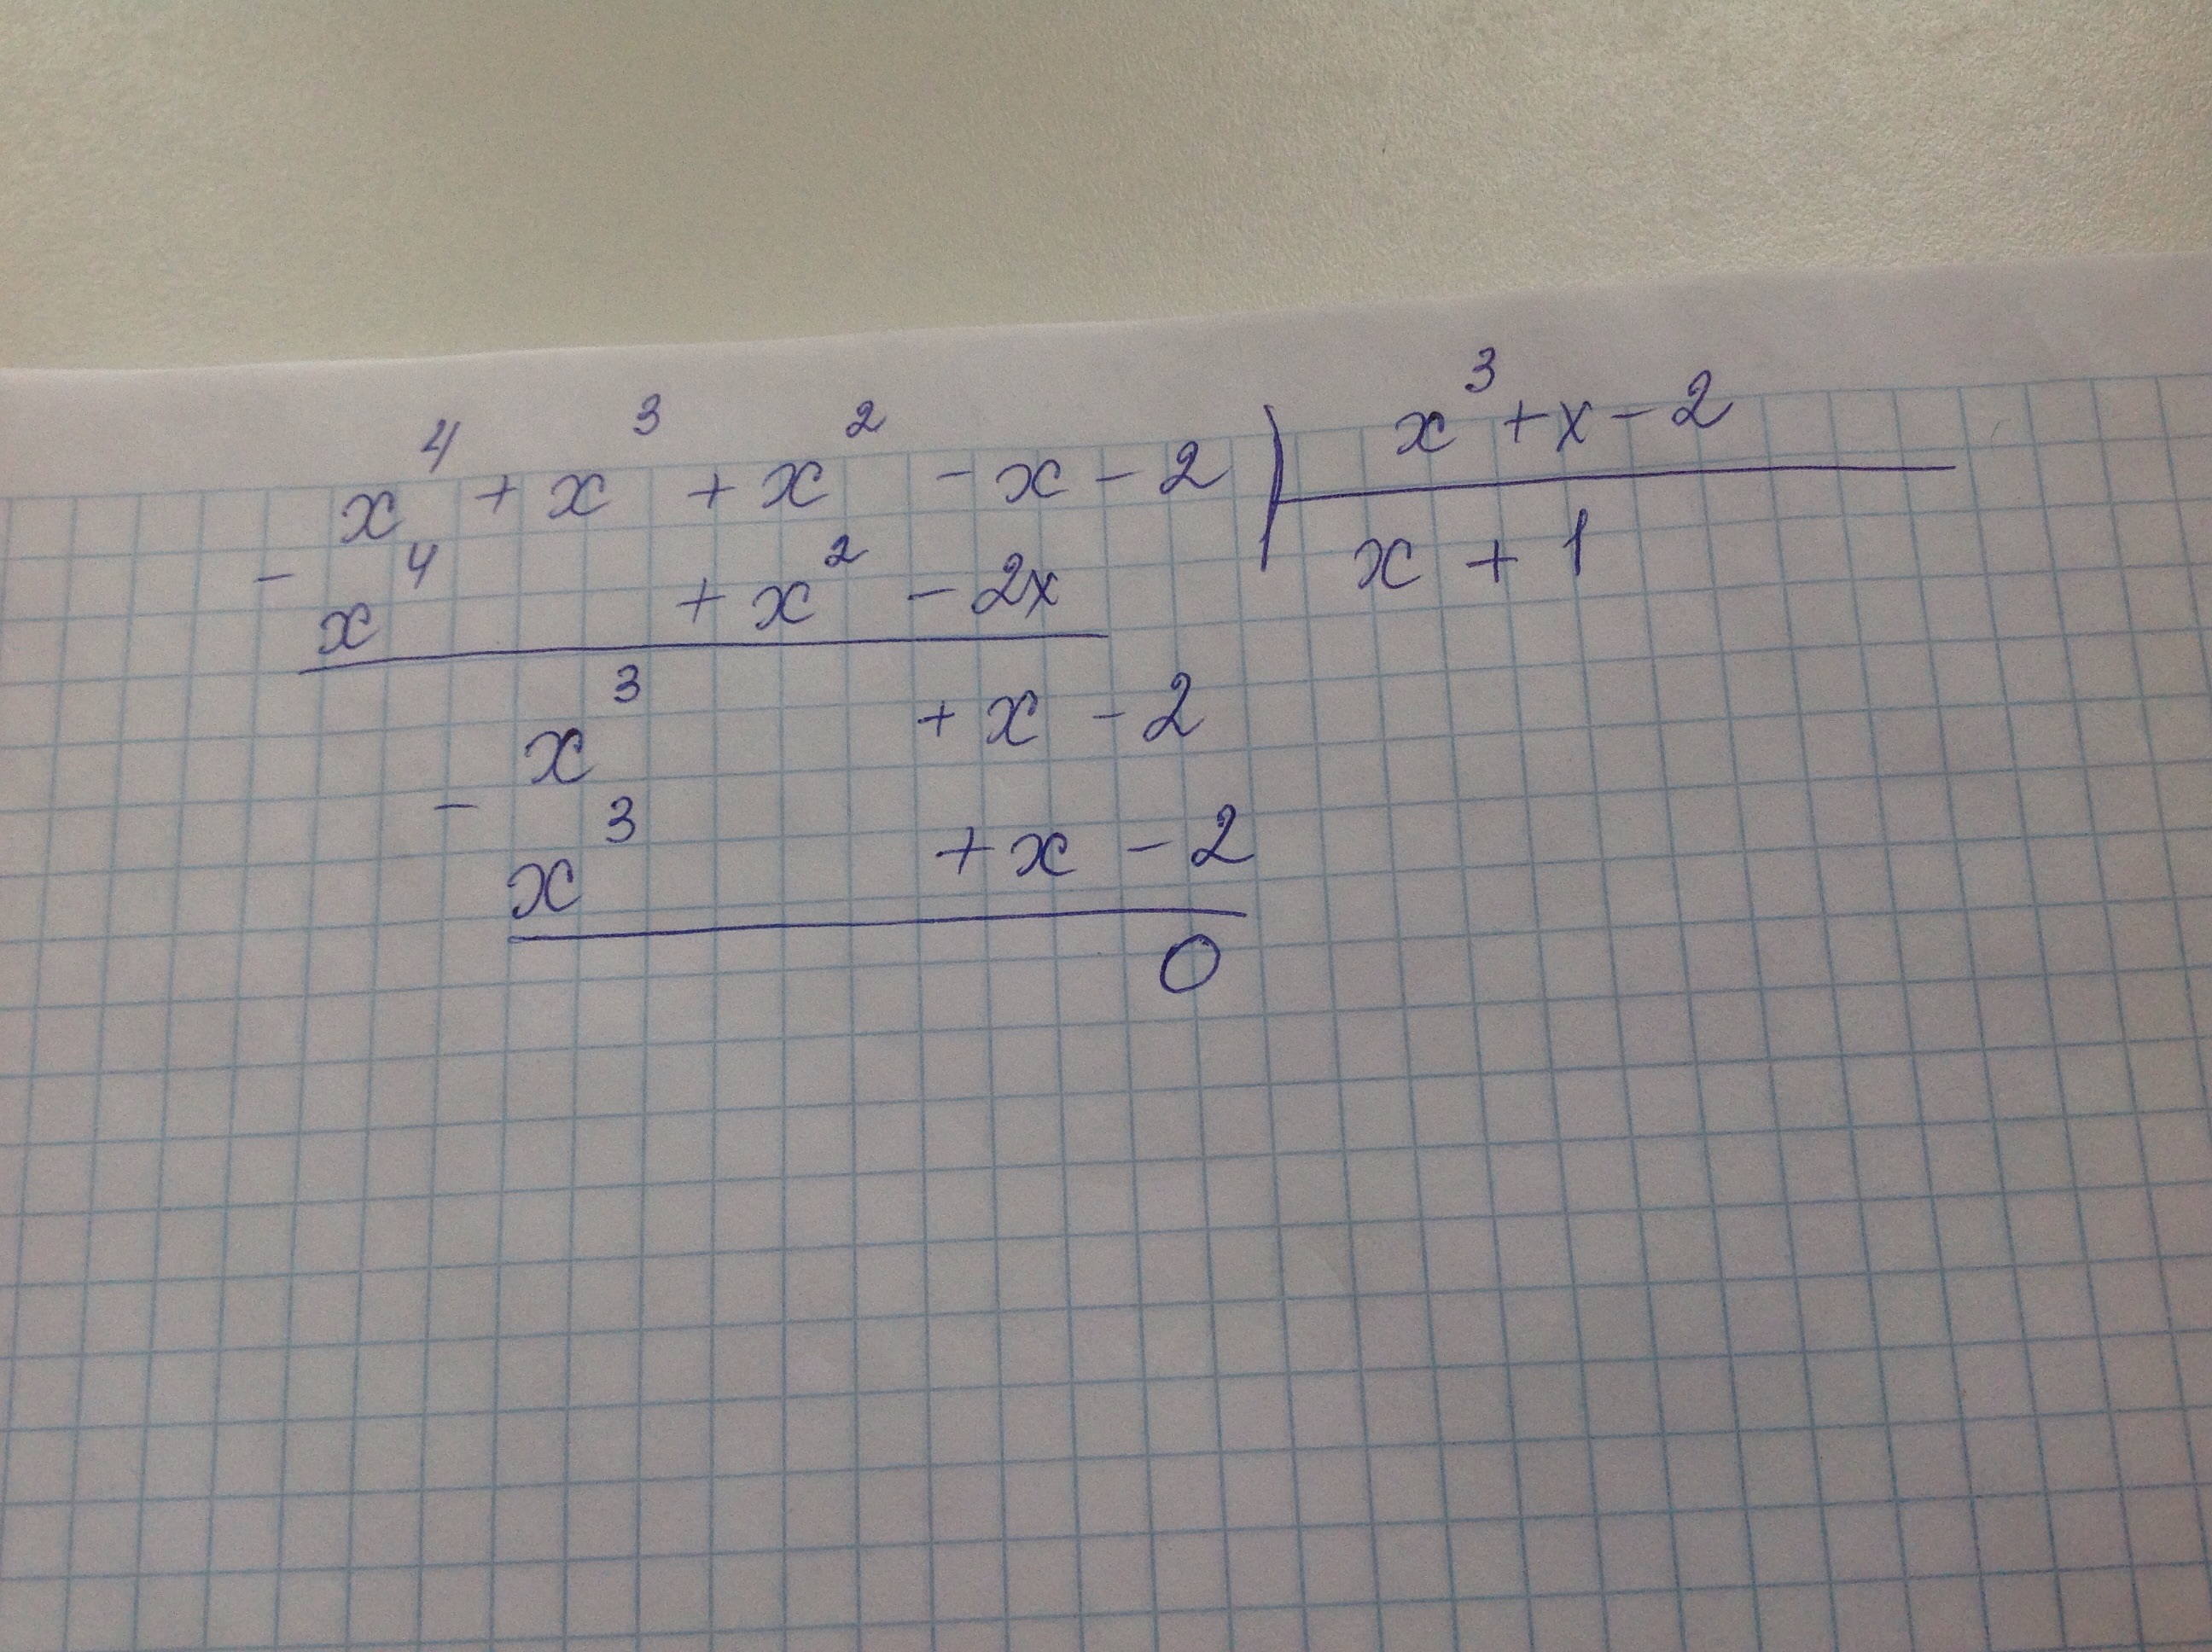 Y x 4x 3 решение. Разделите уголком 3x3-2x2+7x-4. Разделить многочлен 2x4-3x3-x2-+4x. 2x 2 4x 4 x 2 5x -3 x 2. Выполнить деление многочленов: (2 x 4+2 x3−5 x2−2 ) : (x2+ x−2 ).